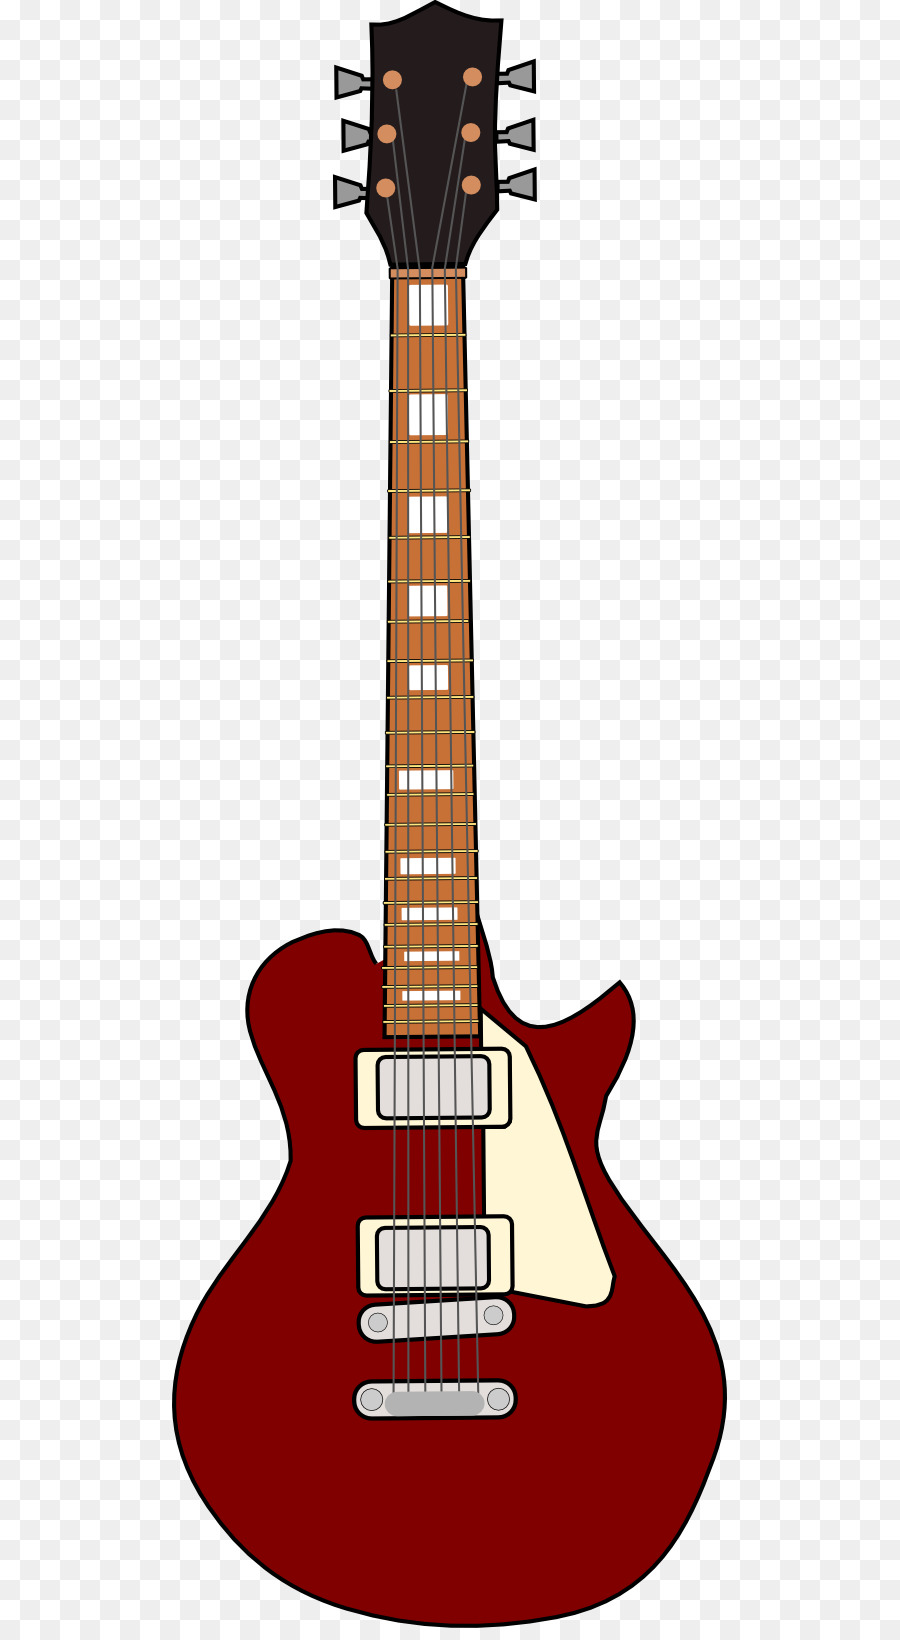 Gibson Les Paul Studio Guitar Clip art - Guitar Images Pictures png download - 555*1628 - Free Transparent Gibson Les Paul png Download.